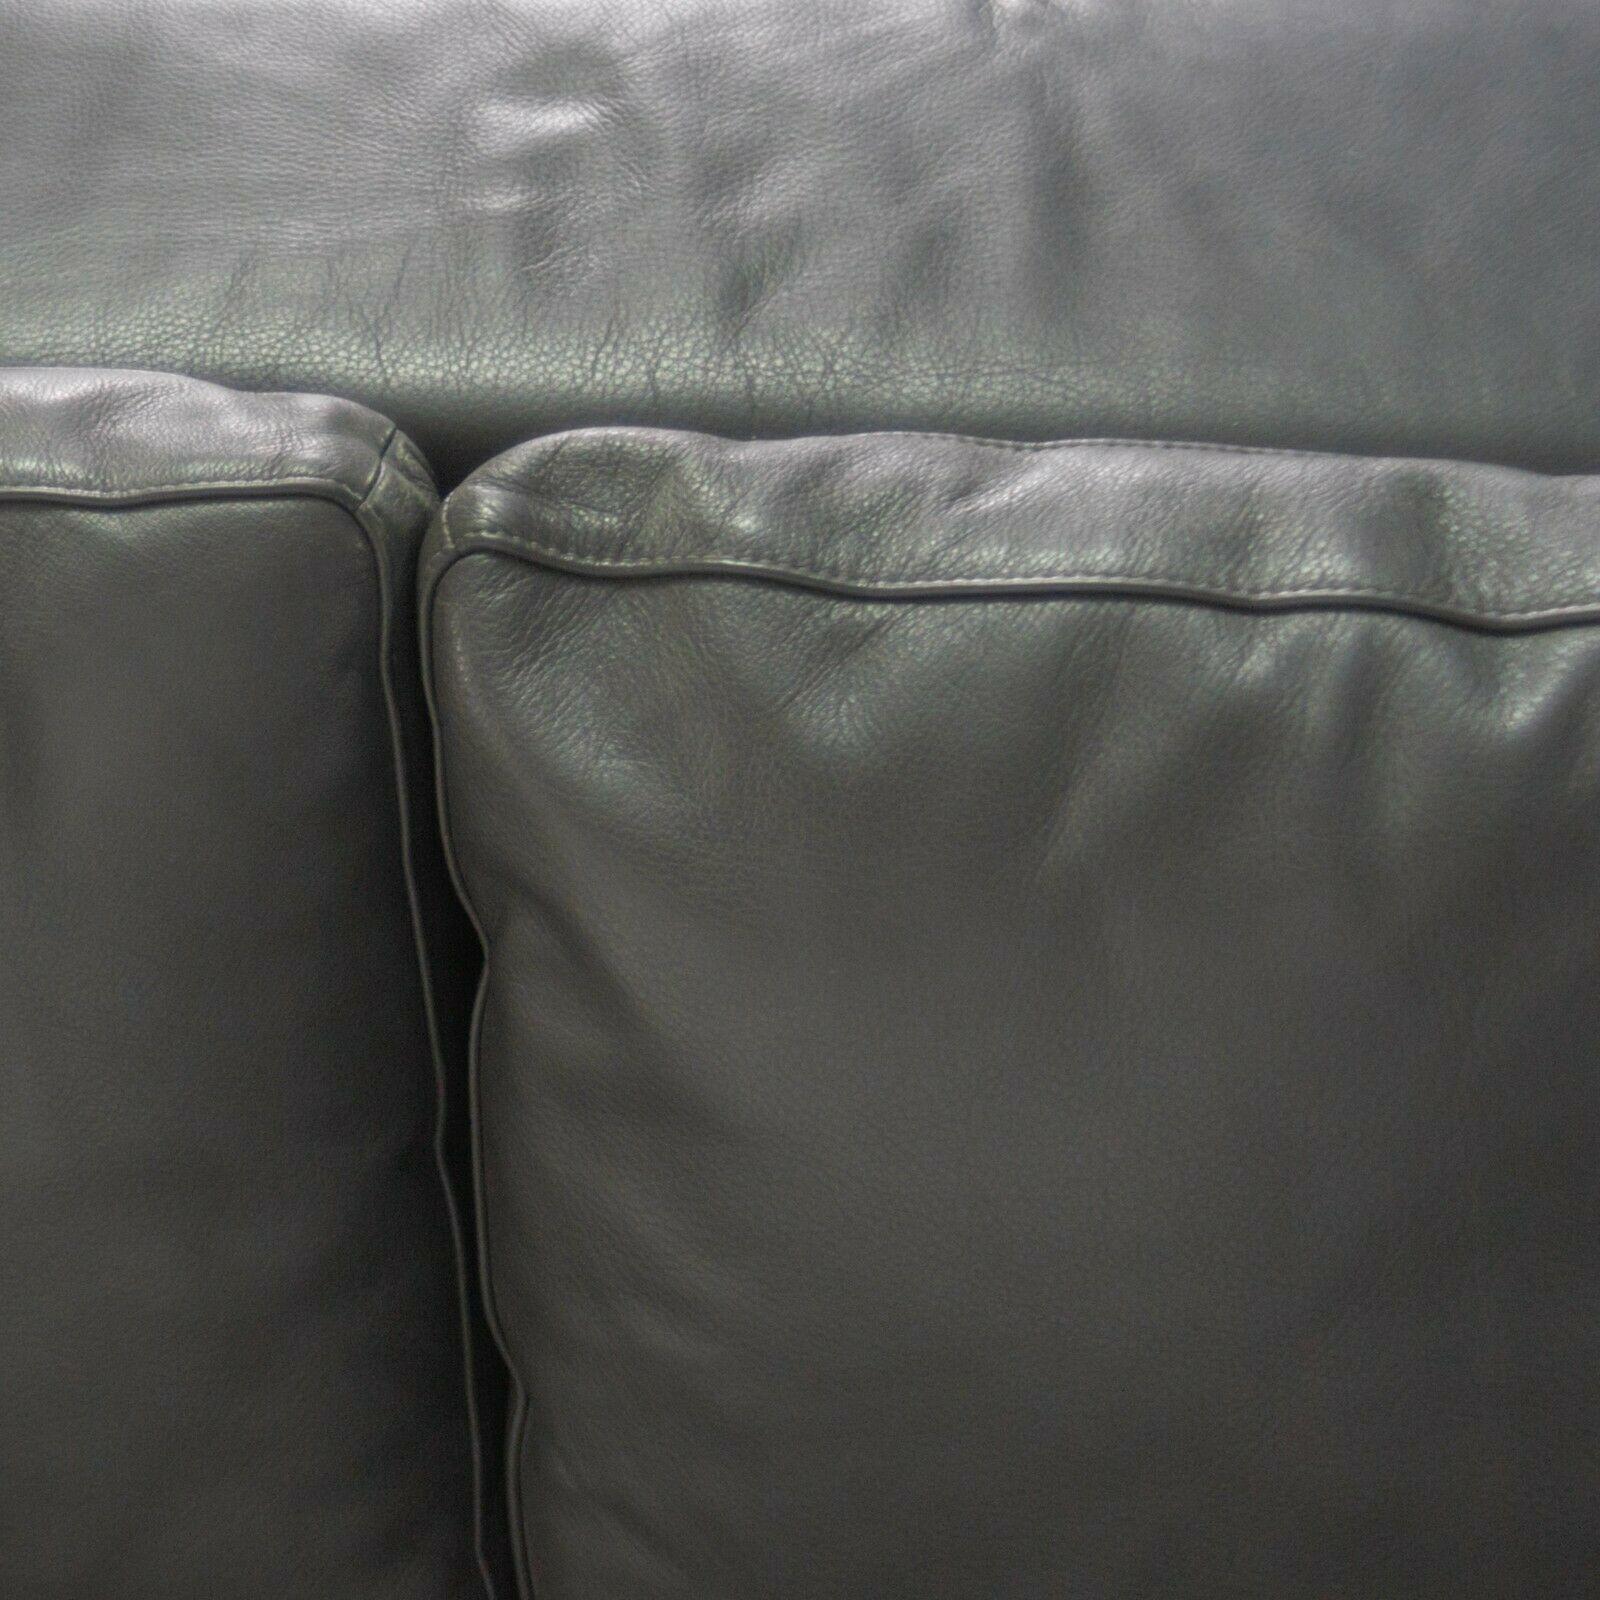 1999 Zanotta Alfa Grey Leather Sectional Modular Sofa by Emaf Progetti 2x Avail For Sale 4